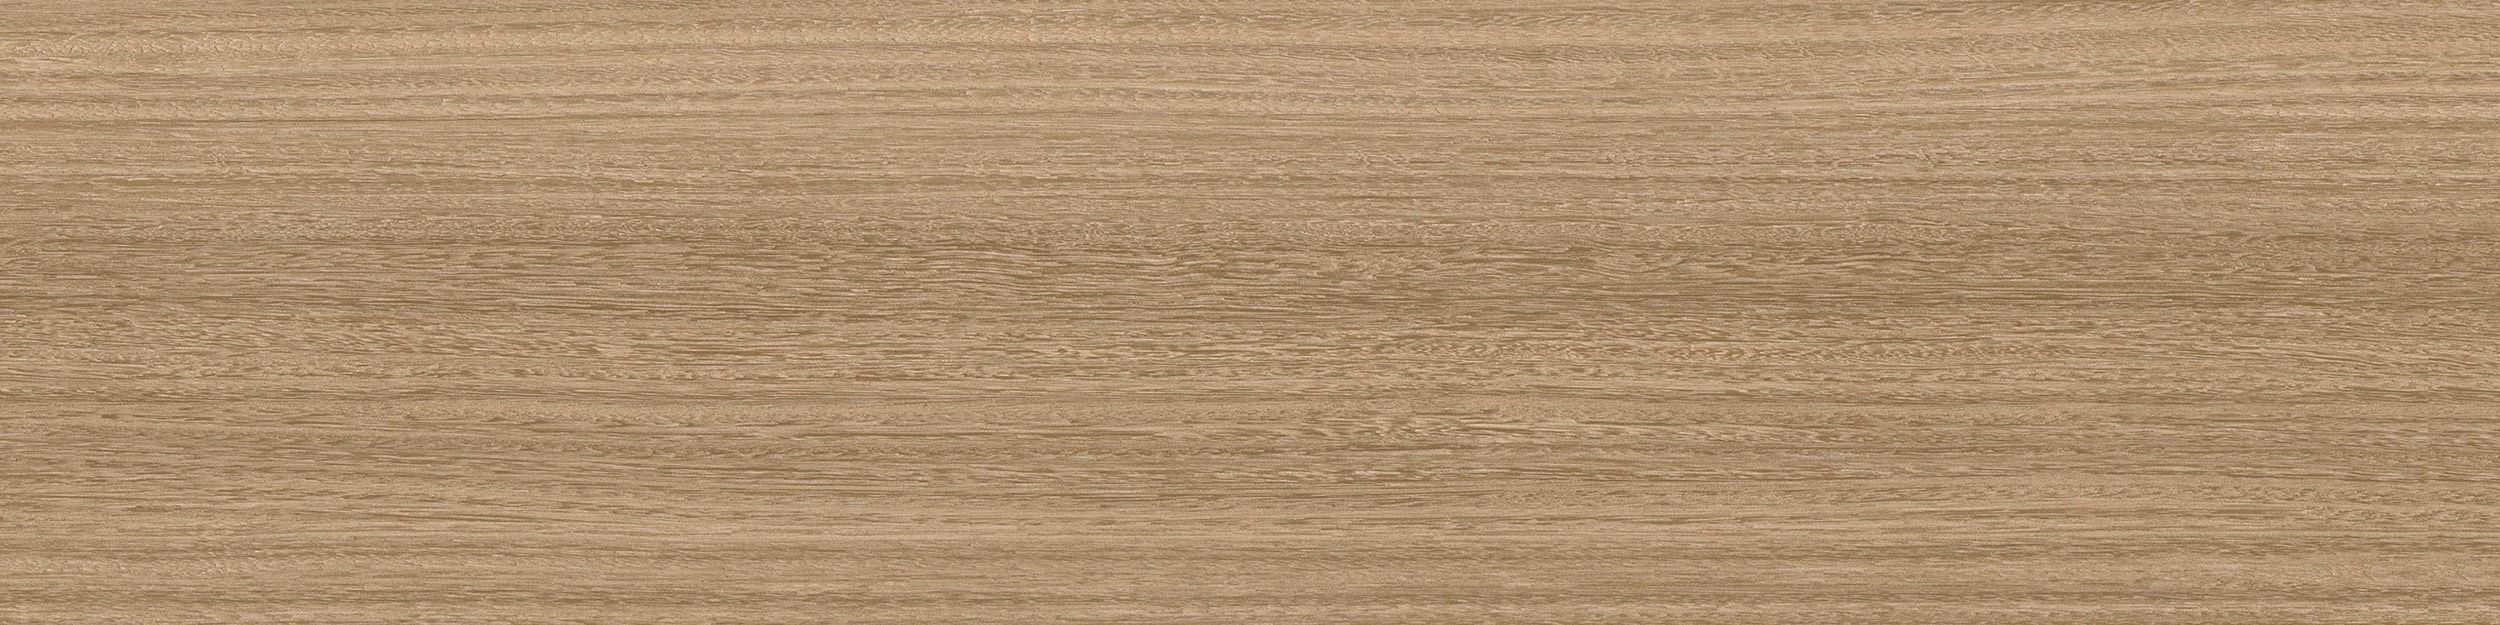 Textured Woodgrains LVT In Hemlock image number 1